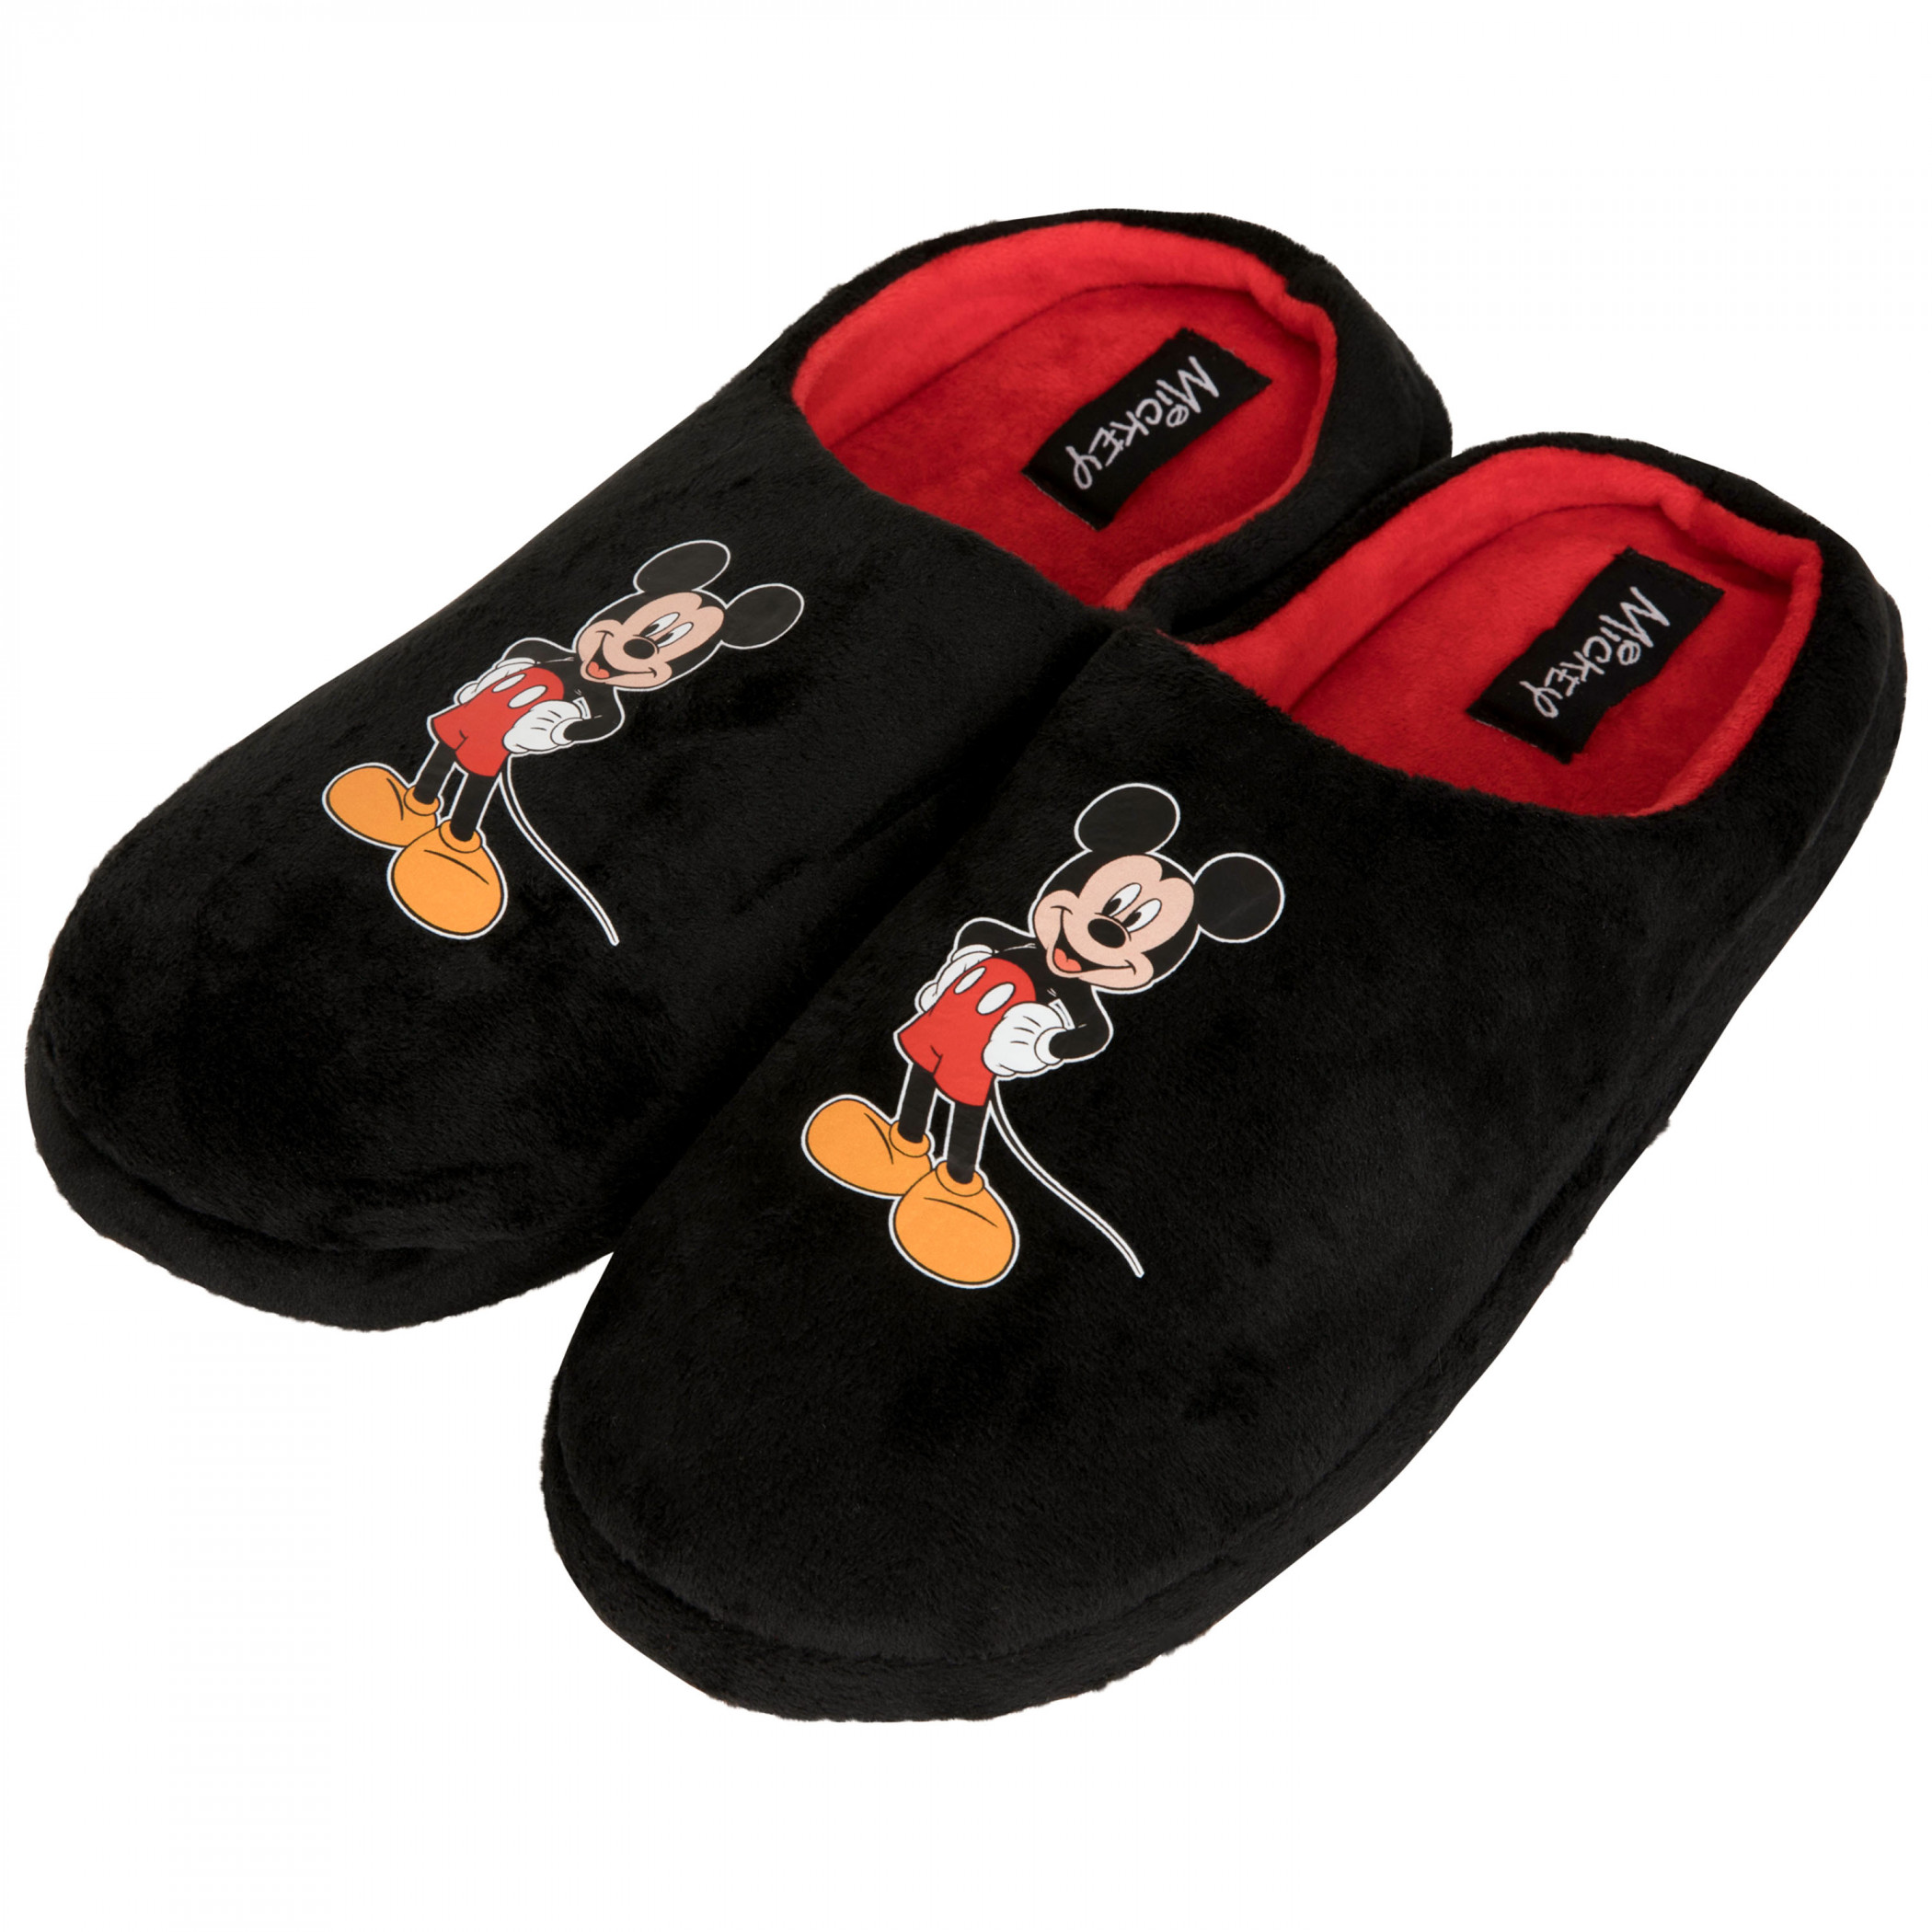 Disney Mickey Mouse Men's House Slippers Black